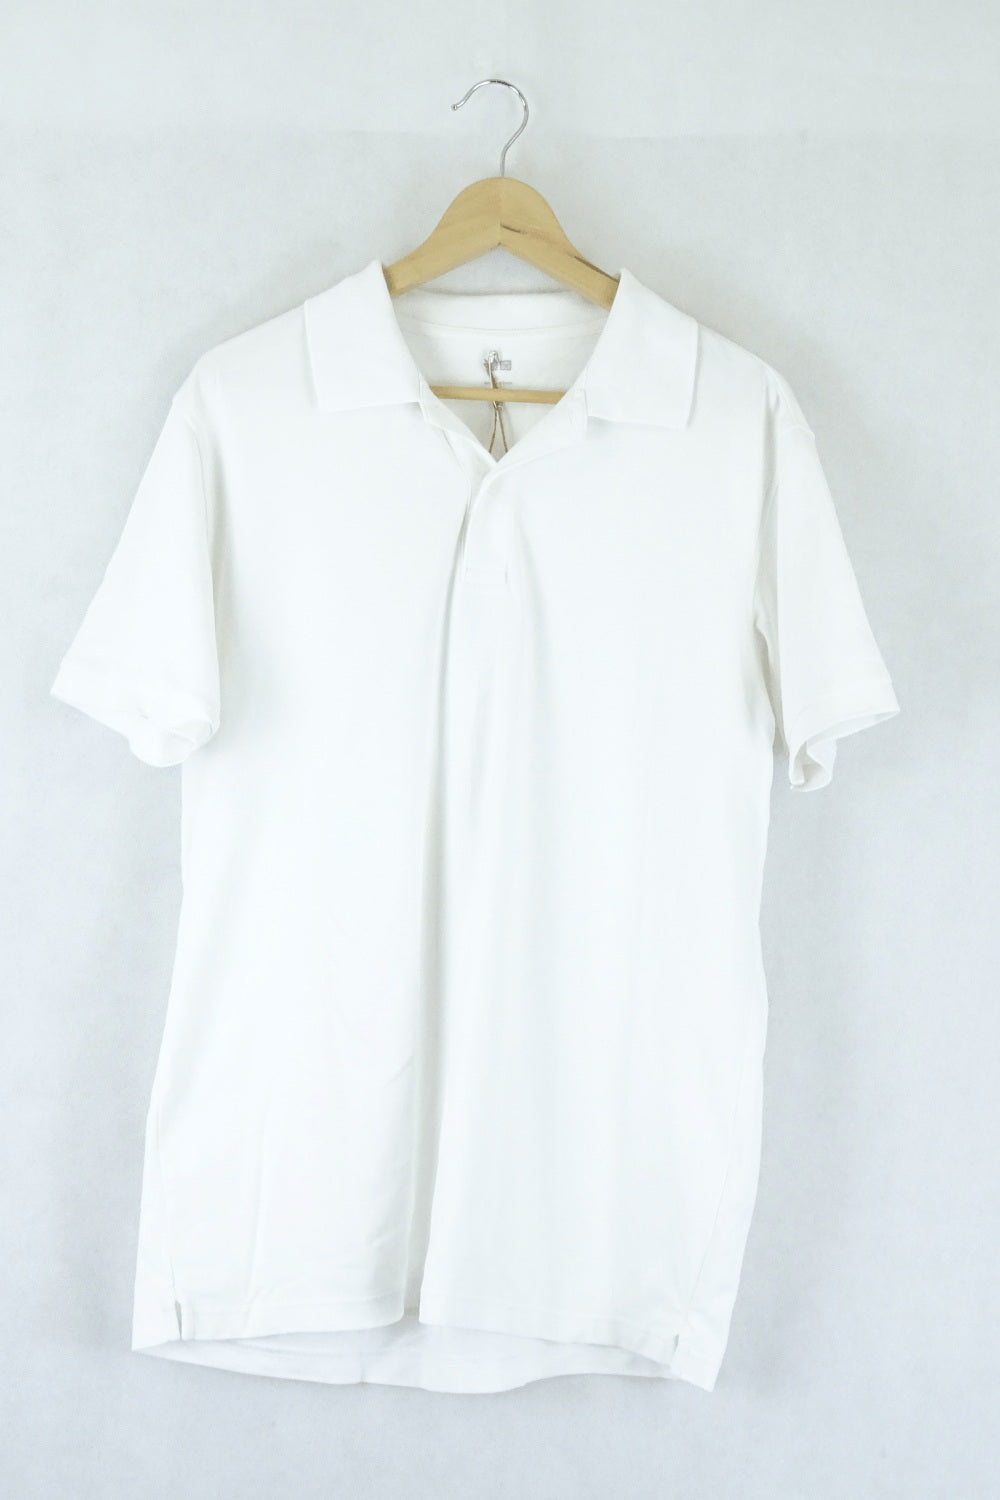 Uniqlo White Polo Shirt L